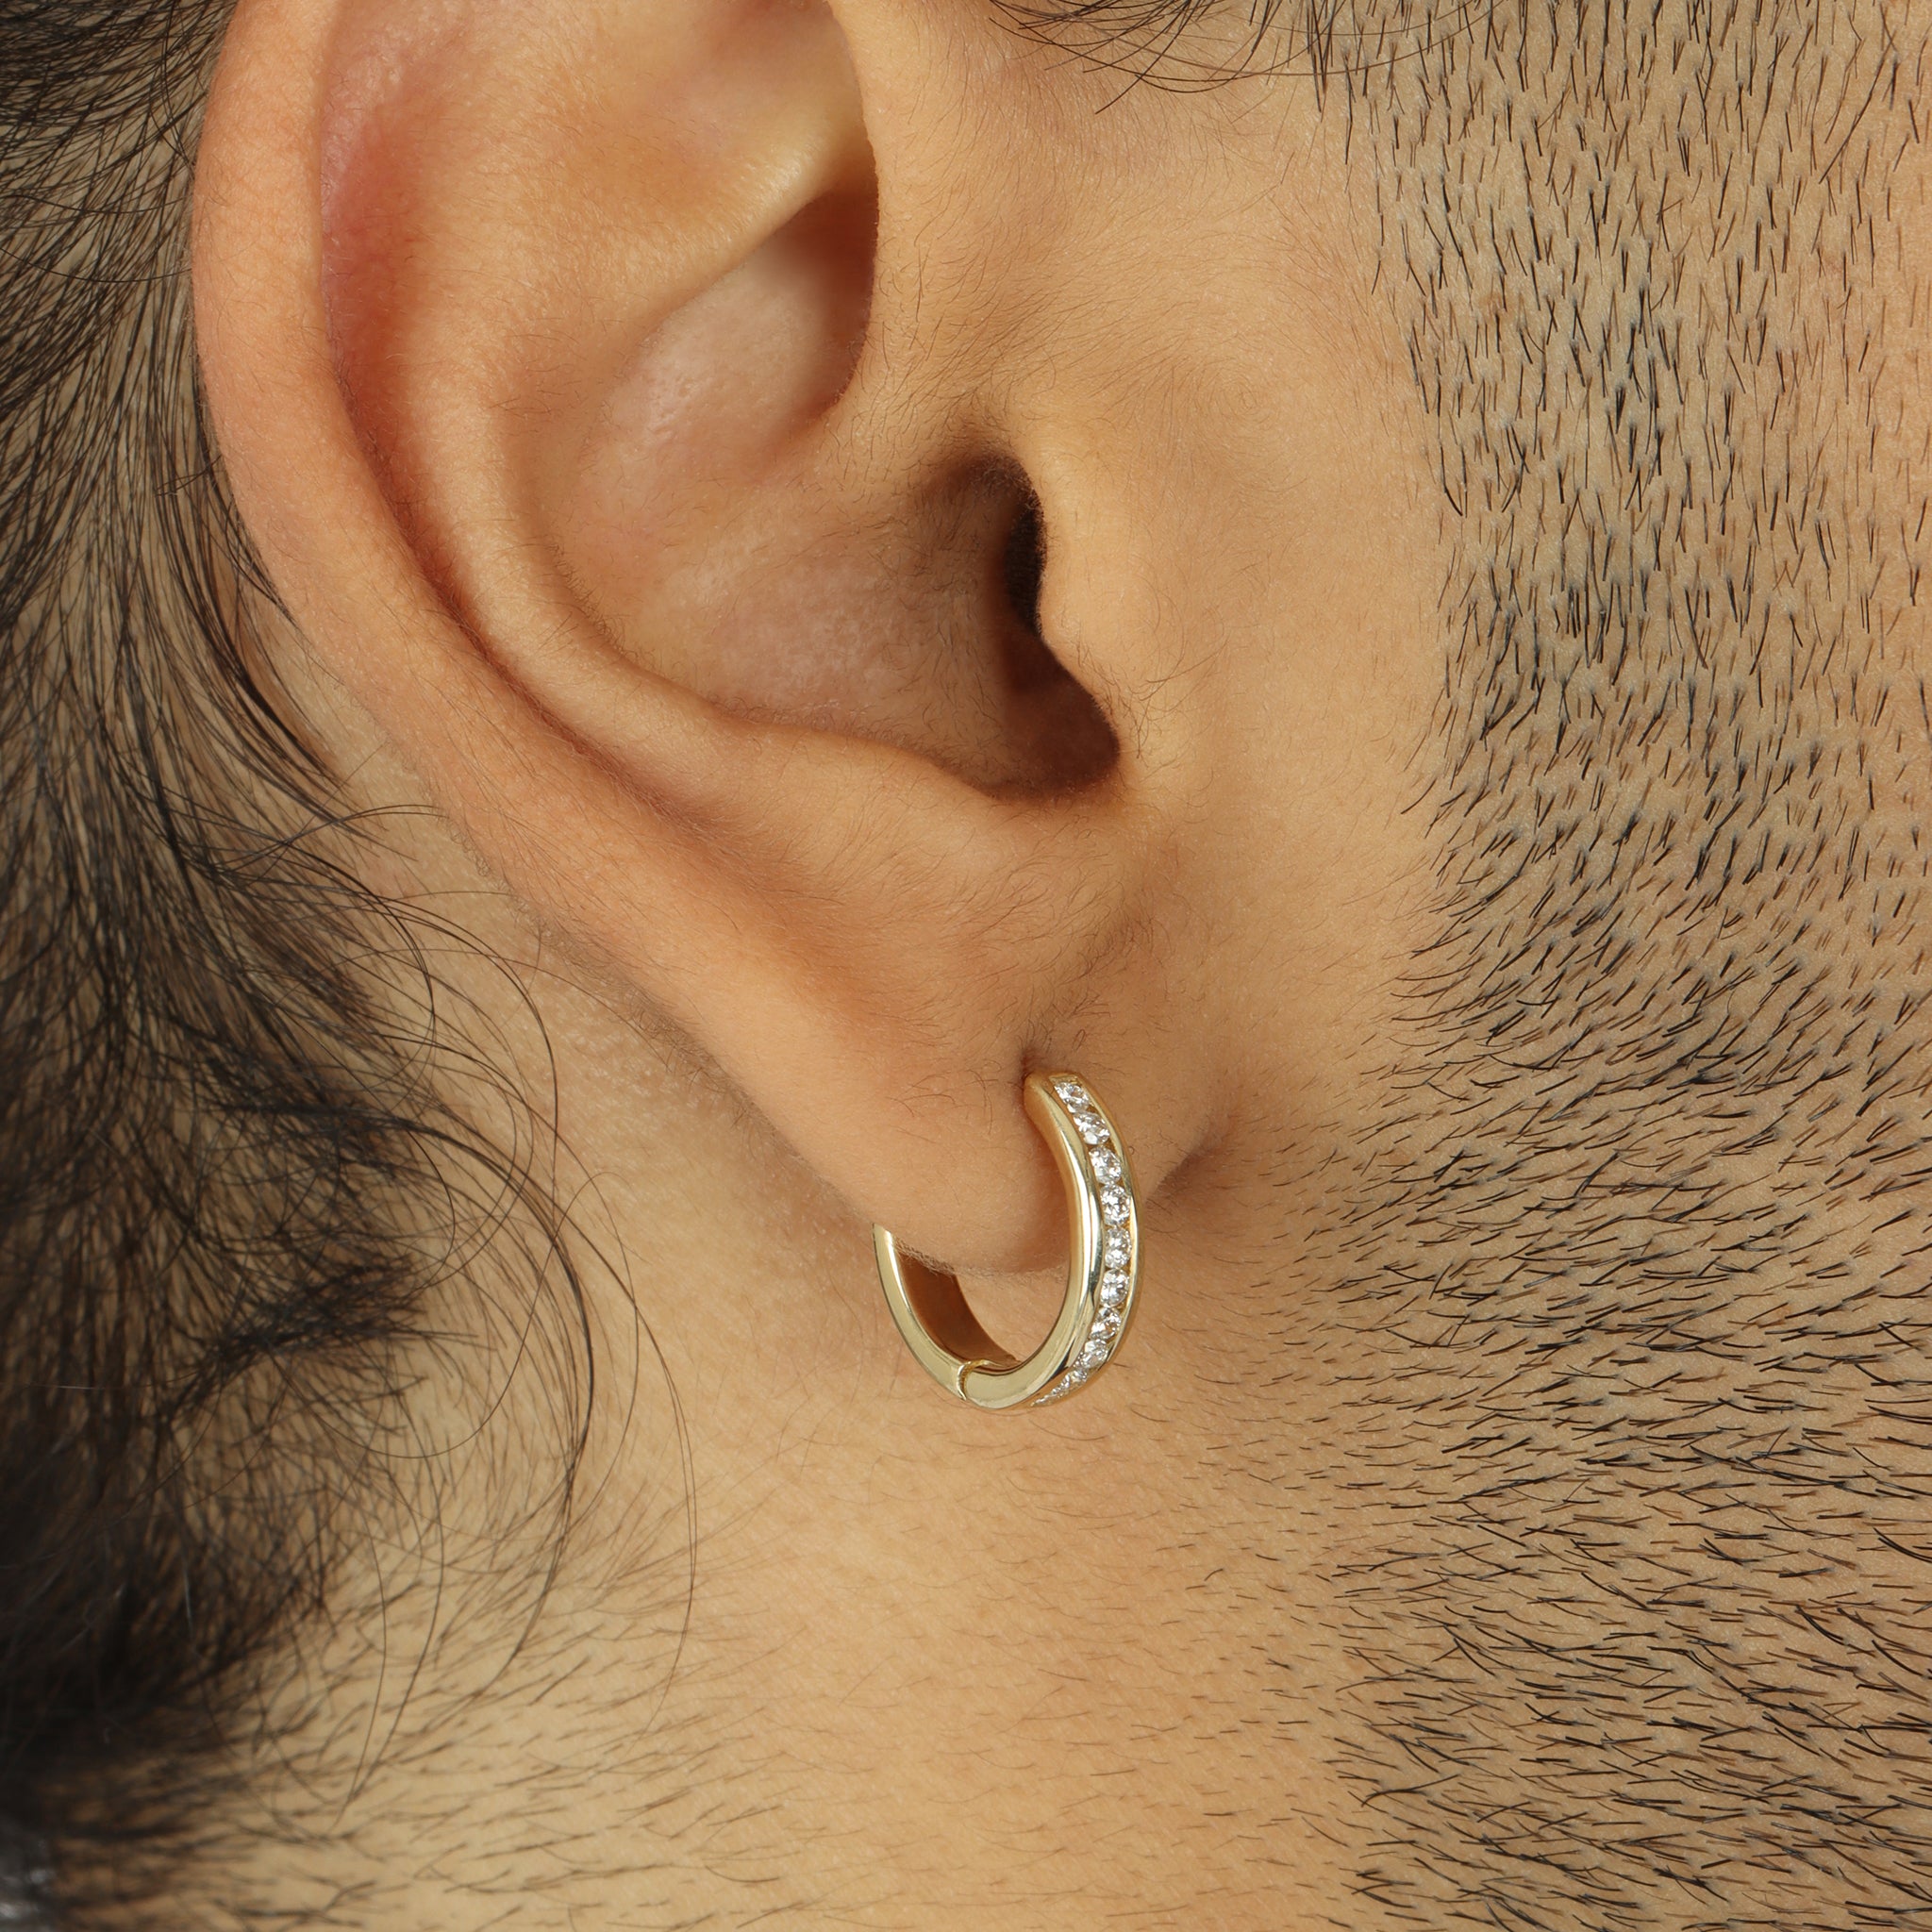 Amazoncom VEXXS Diamond Hoop Earrings for Men 14K Gold Plated Iced Out  Dangle Hoops Earrings Micro Pave 5A CZ Stones Dangle Earrings  Hypoallergenic Earrings for Men A14K Gold Clothing Shoes  Jewelry